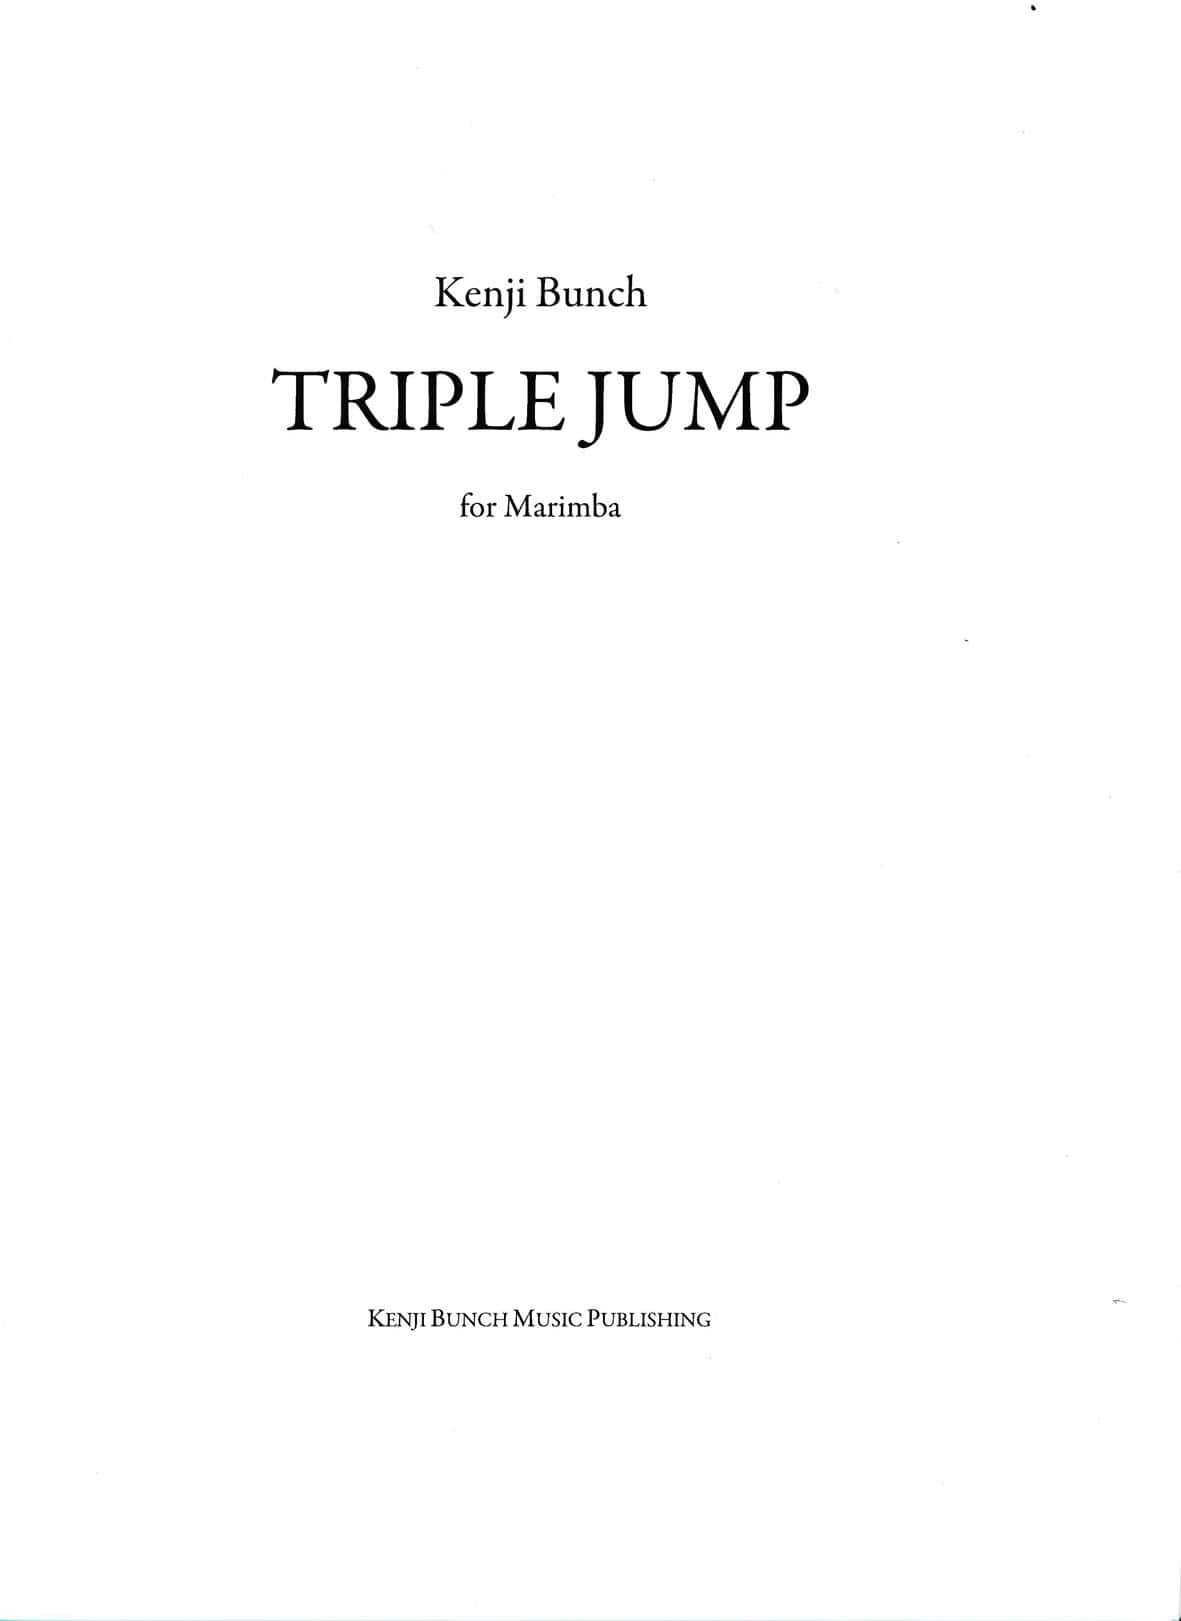 Triple Jump by Kenji Bunch